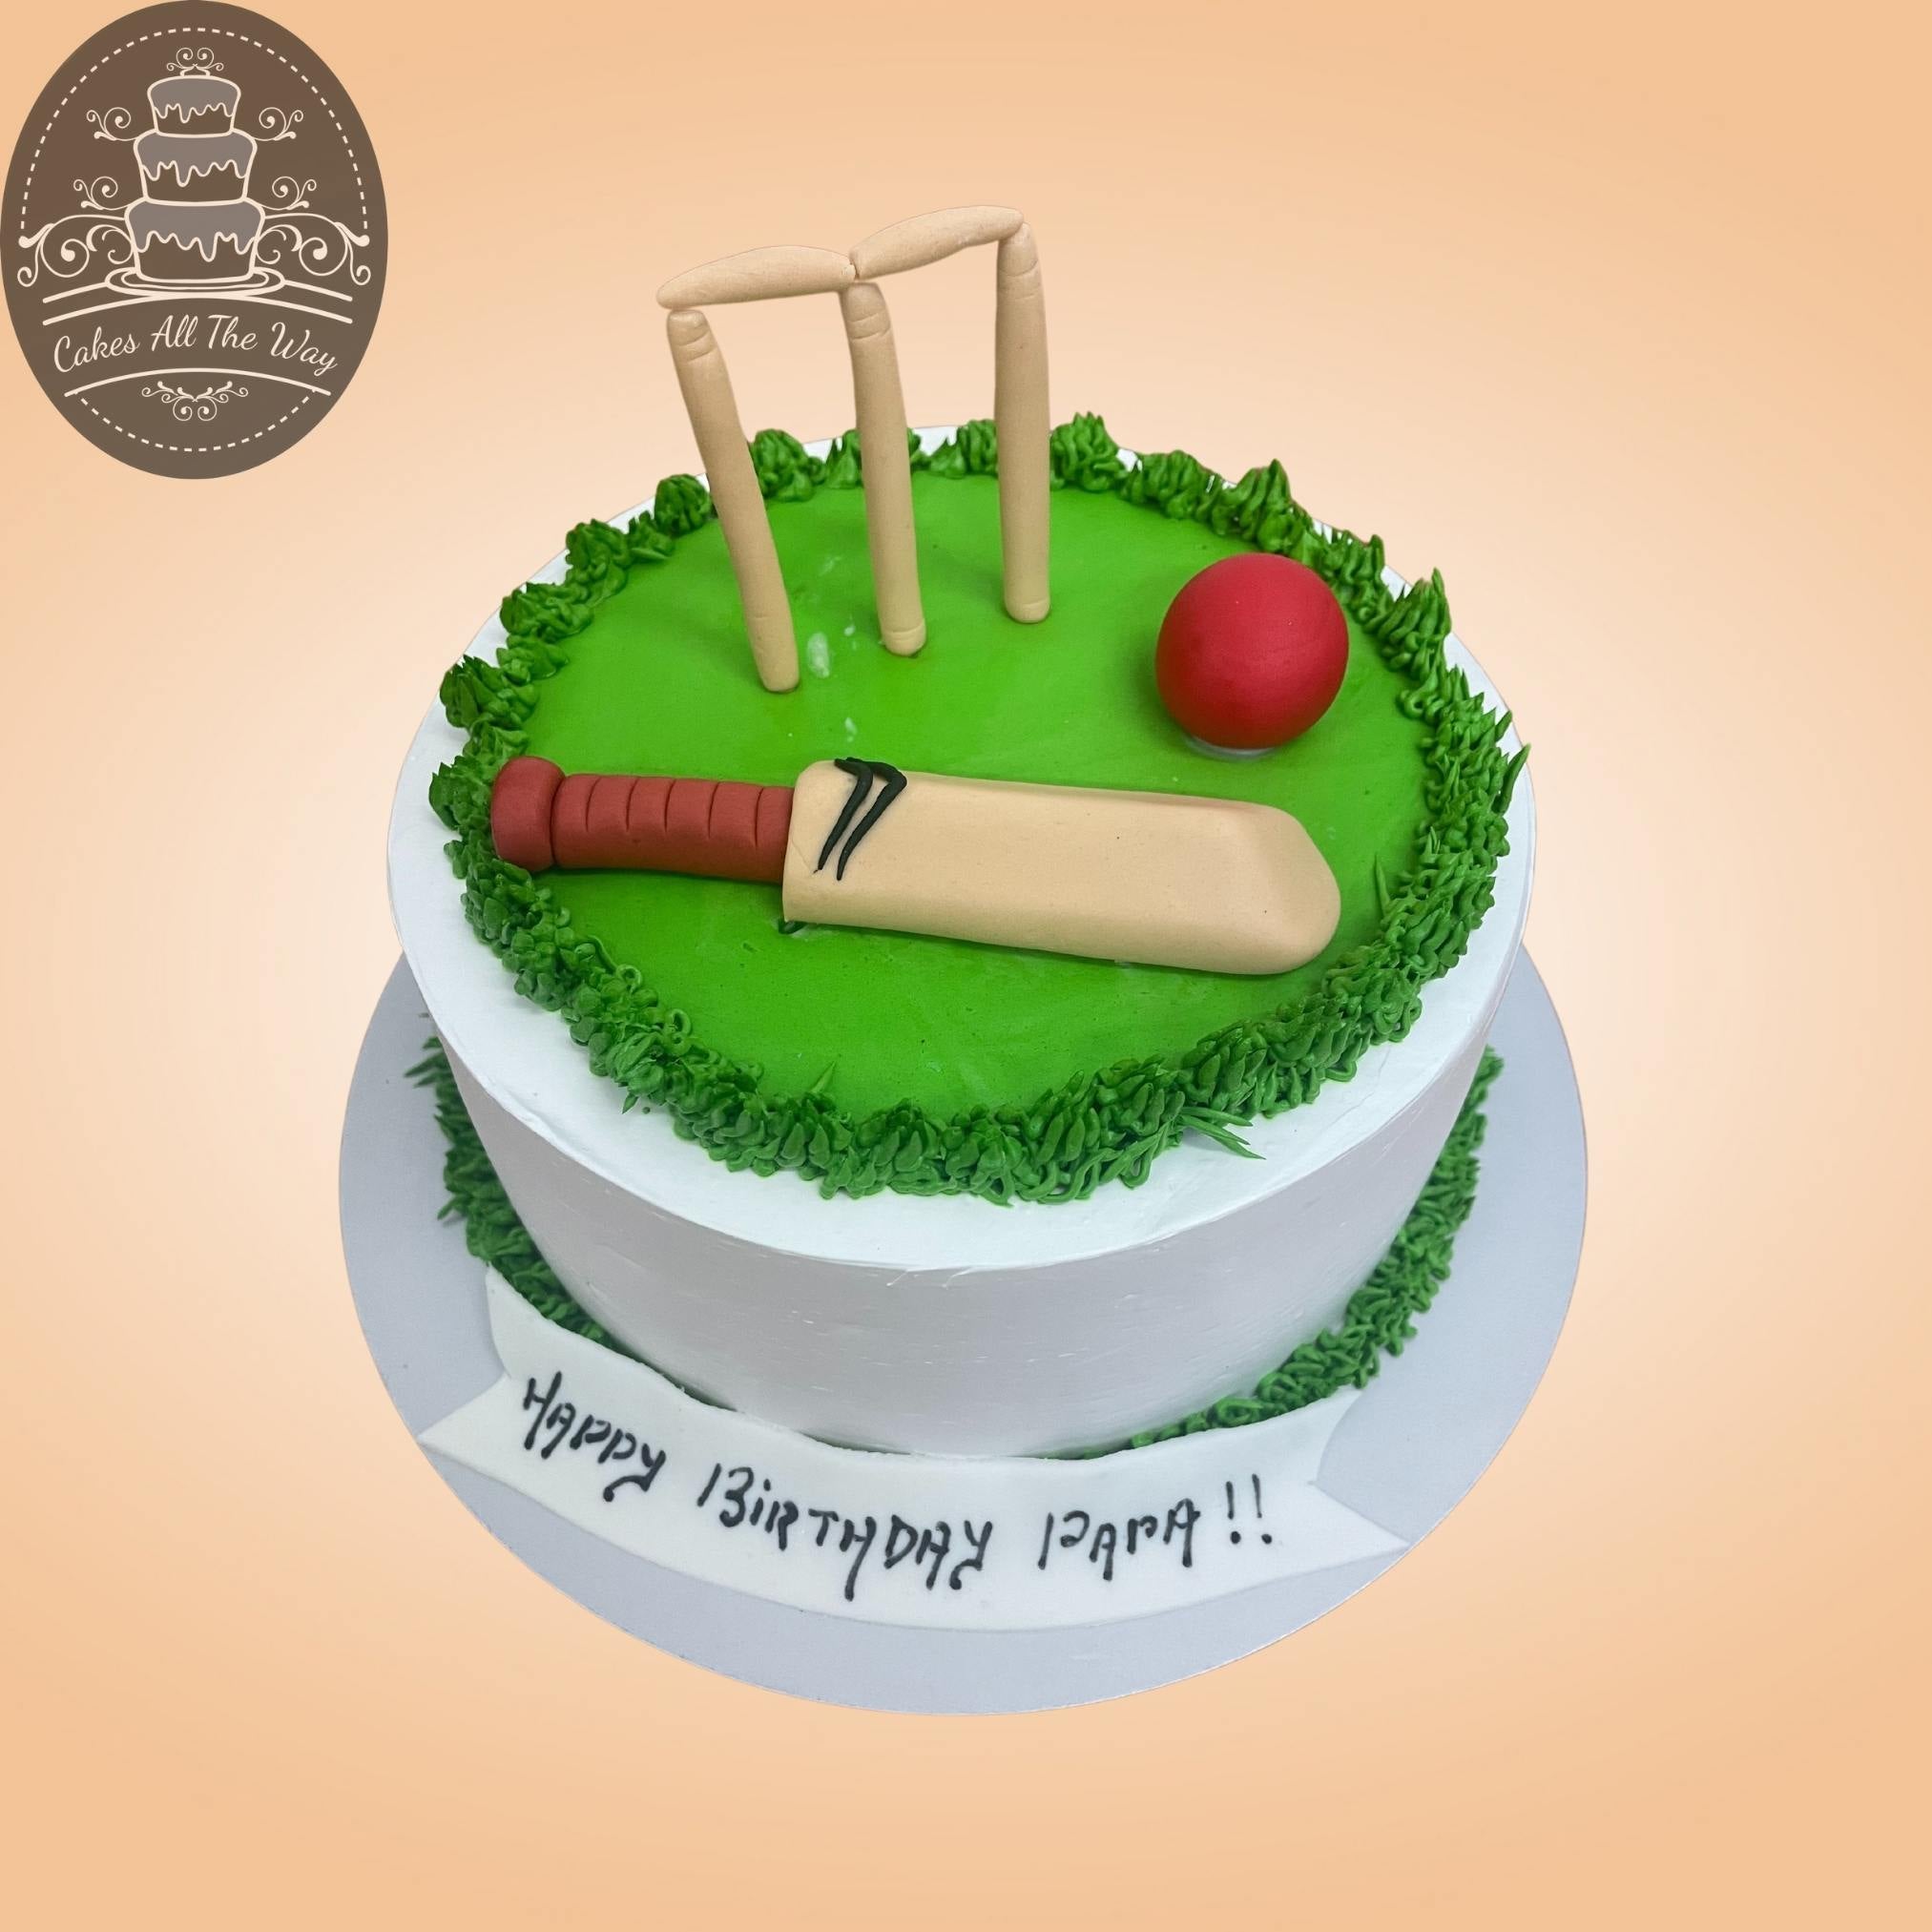 Cricket Lover's Cake